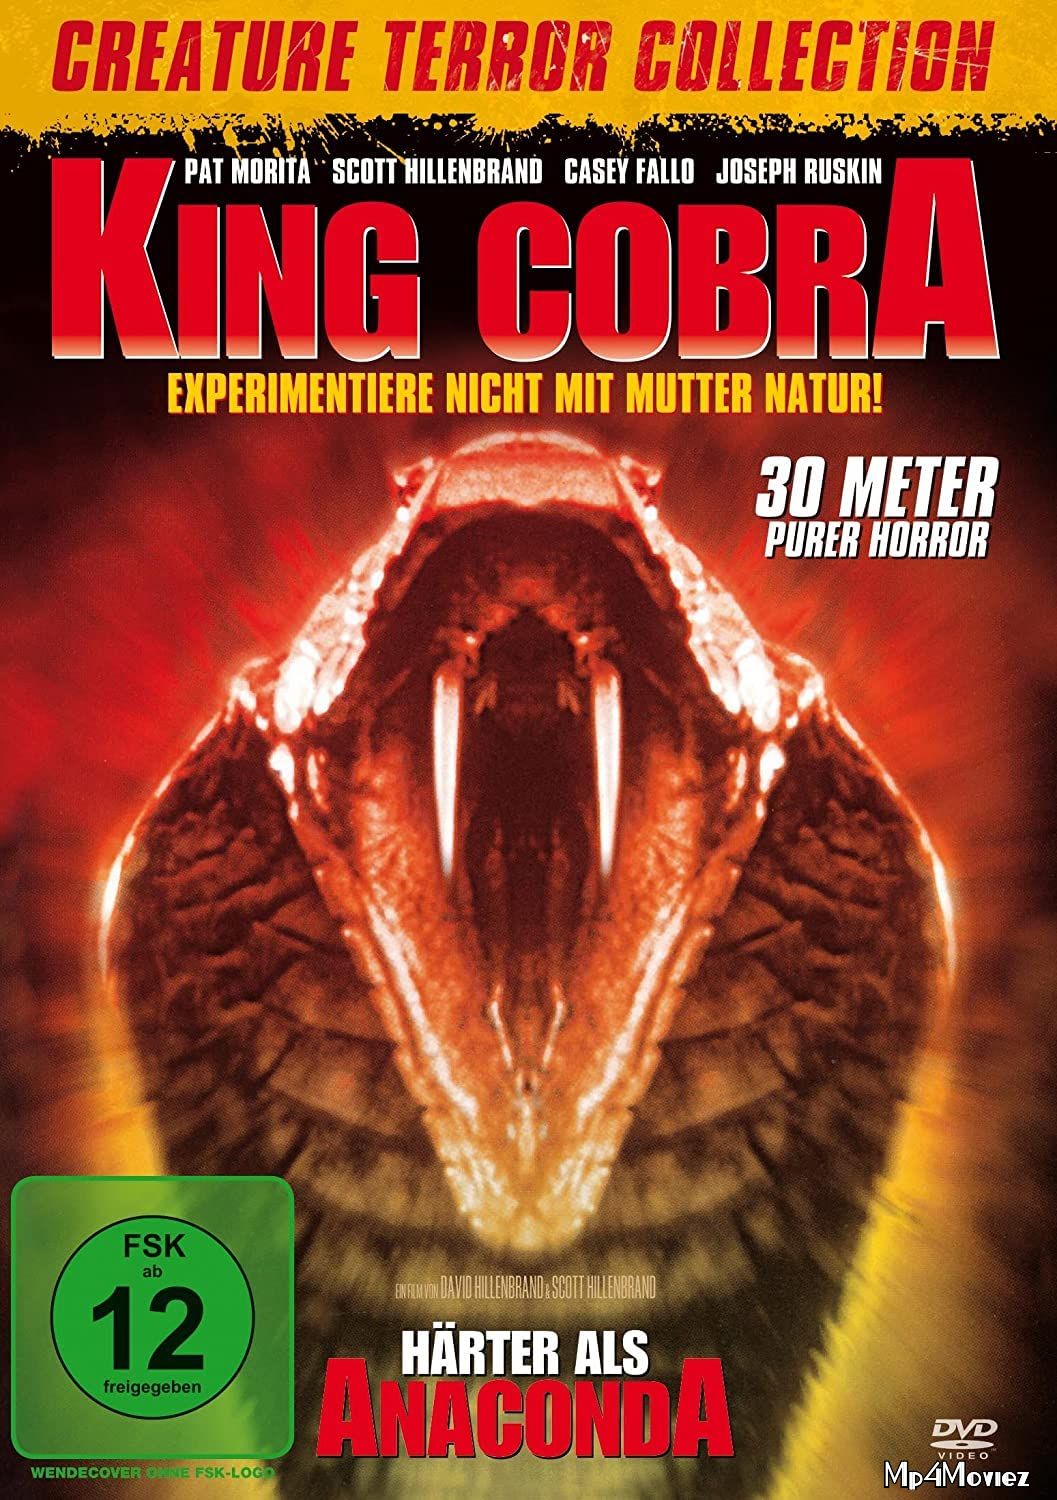 King Cobra (1999) Hindi Dubbed Movie download full movie